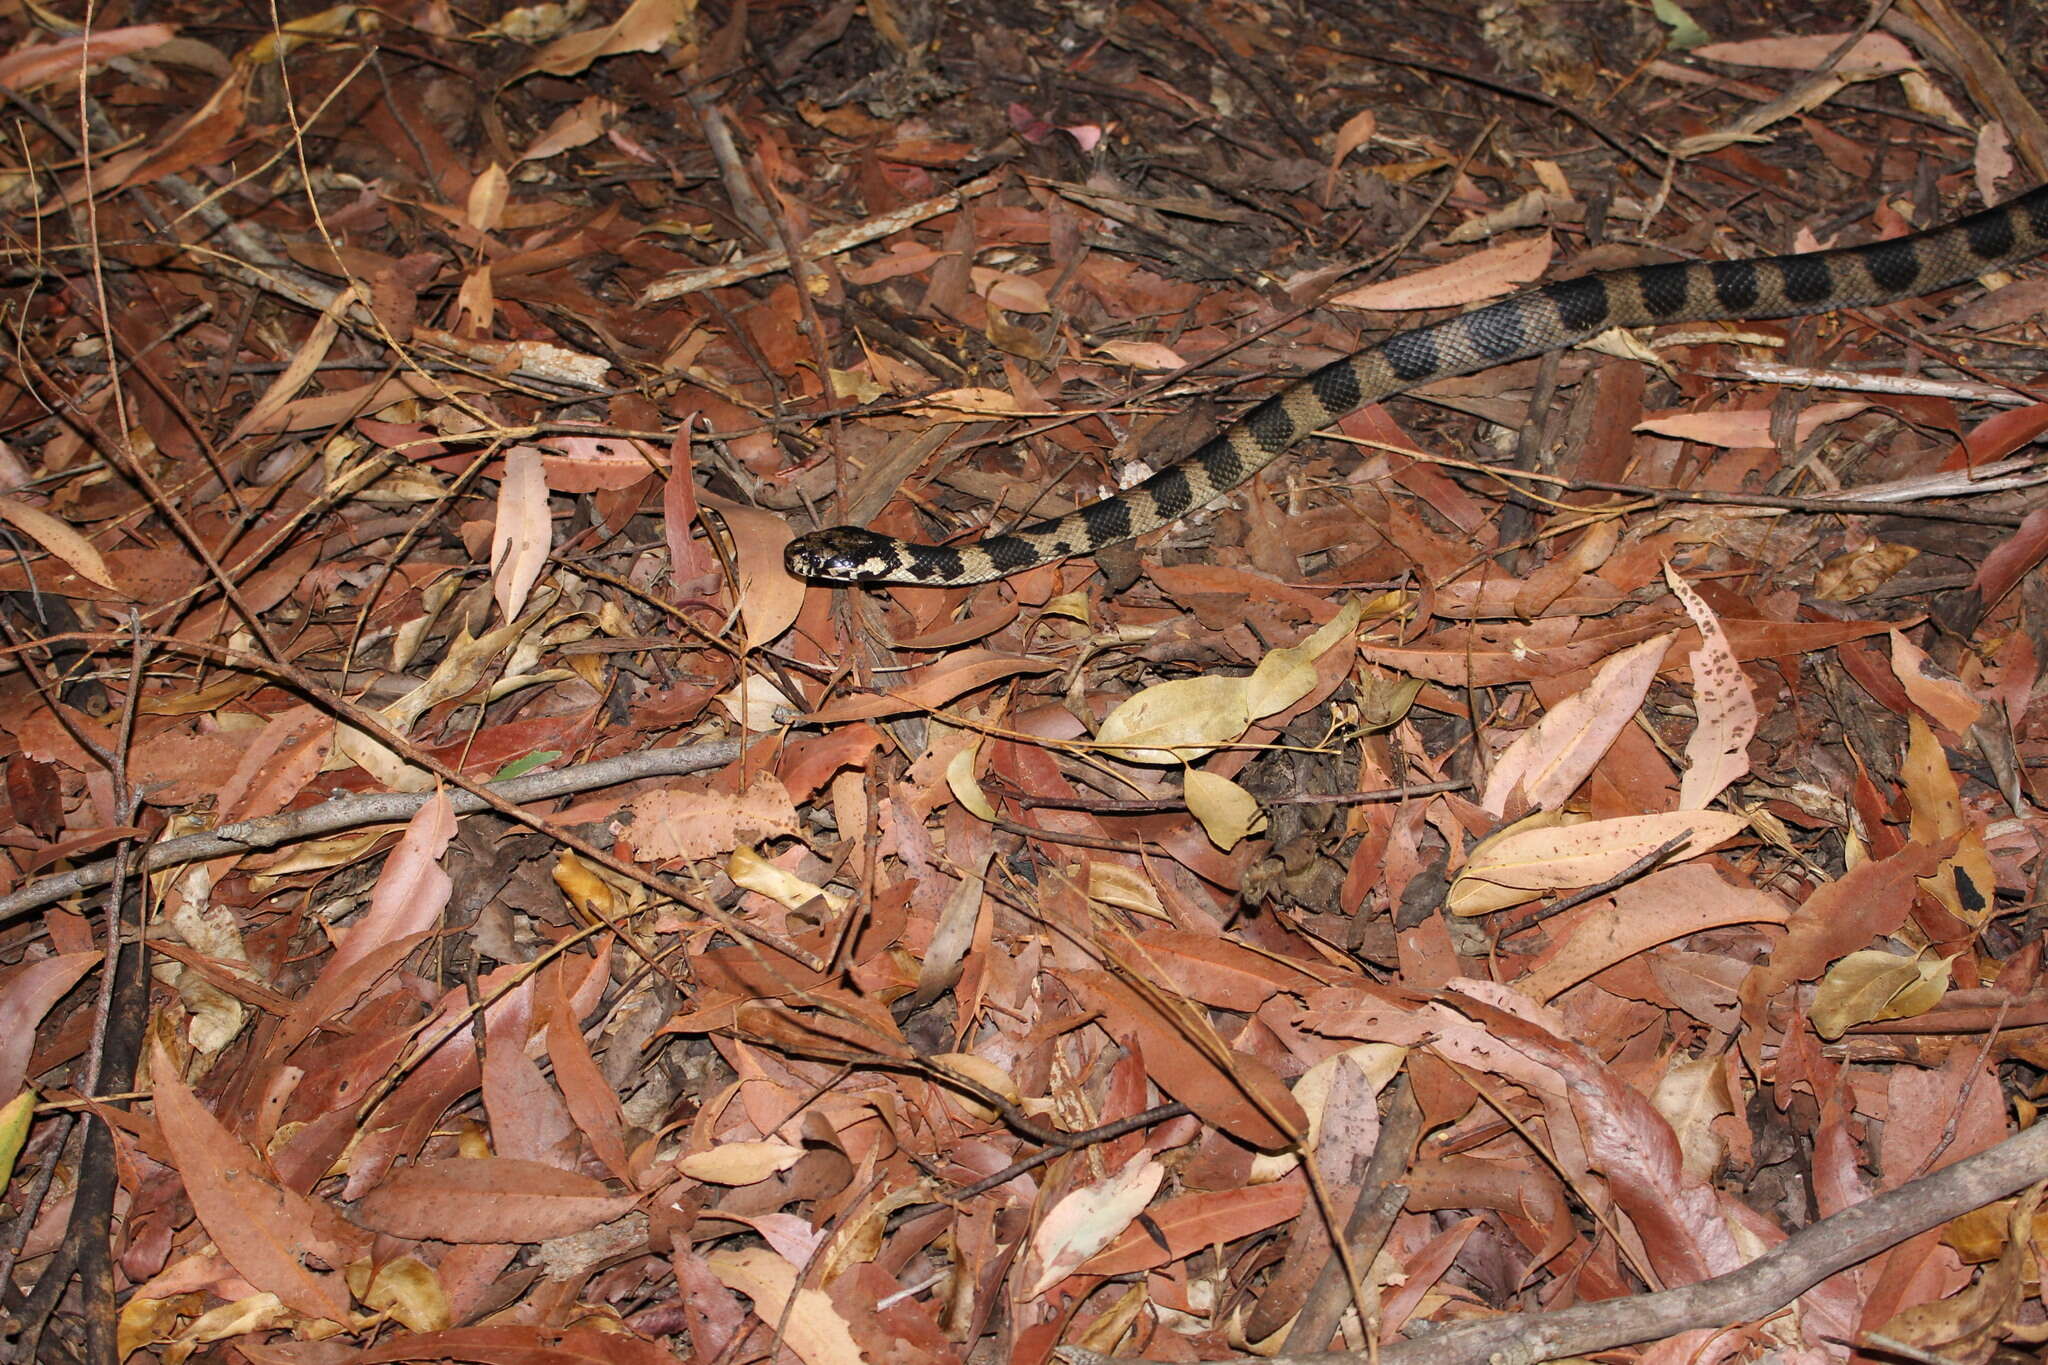 Image of Stephens's Banded Snake